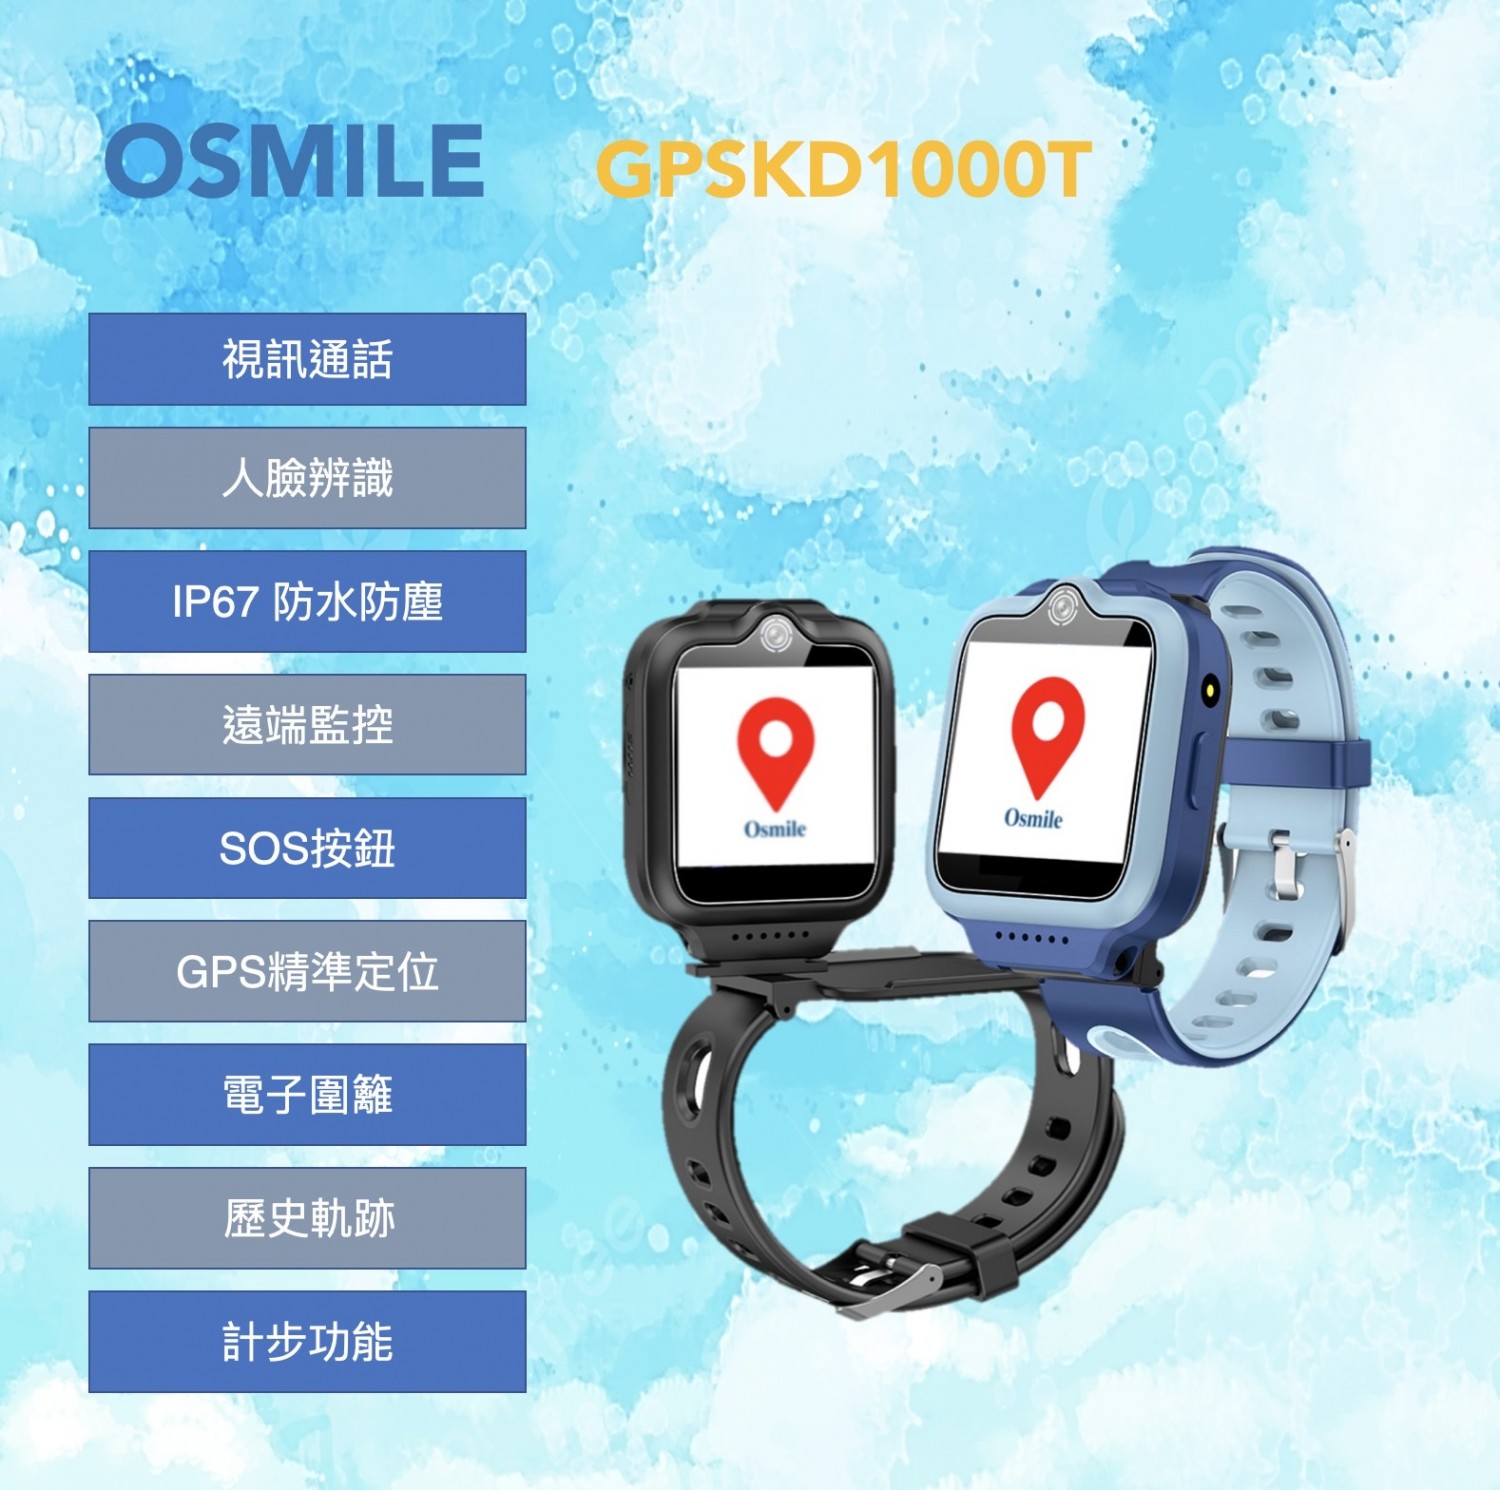 Osmile GPSKD1000T 可旋轉 前後雙鏡頭 GPS安全定位兒童智能手錶 (YI)